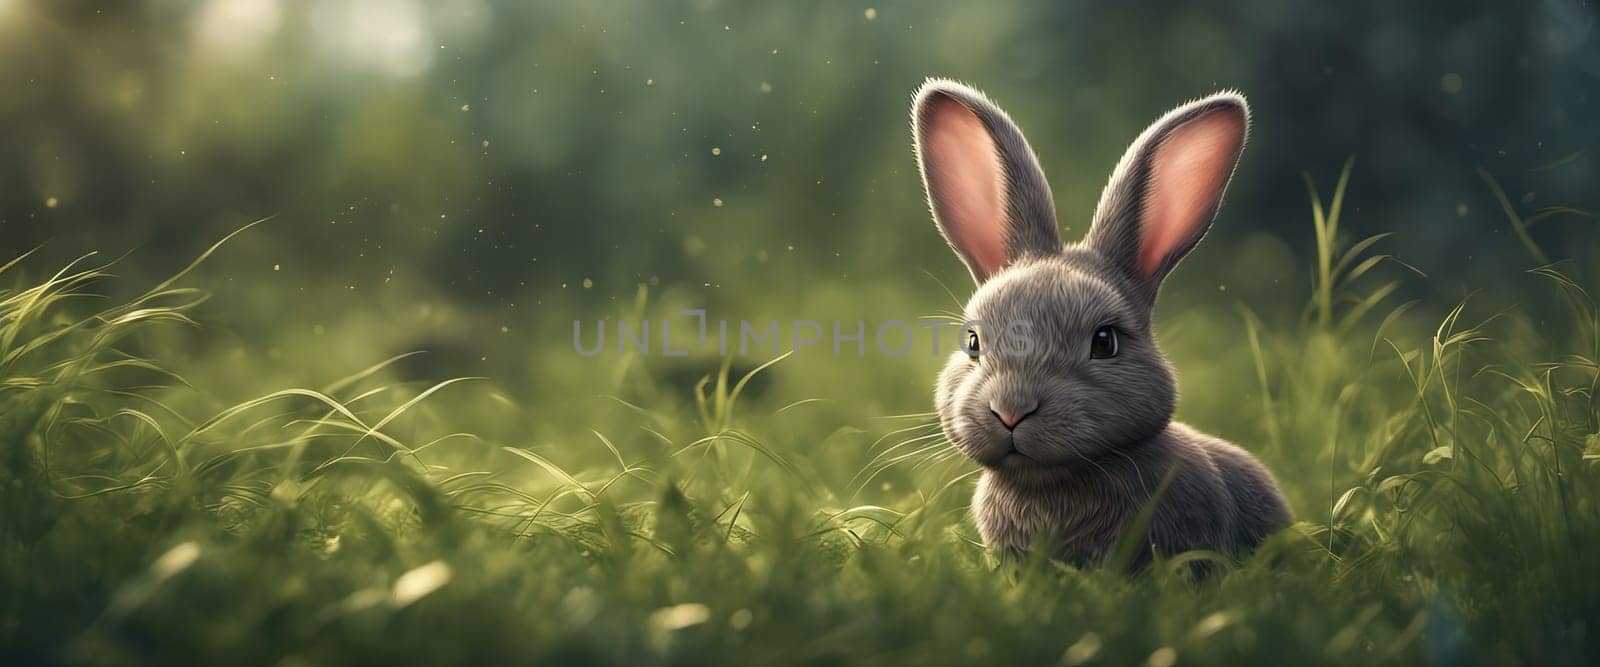 Cute little rabbit sitting in grass in the sunshine, banner for your design. by EkaterinaPereslavtseva